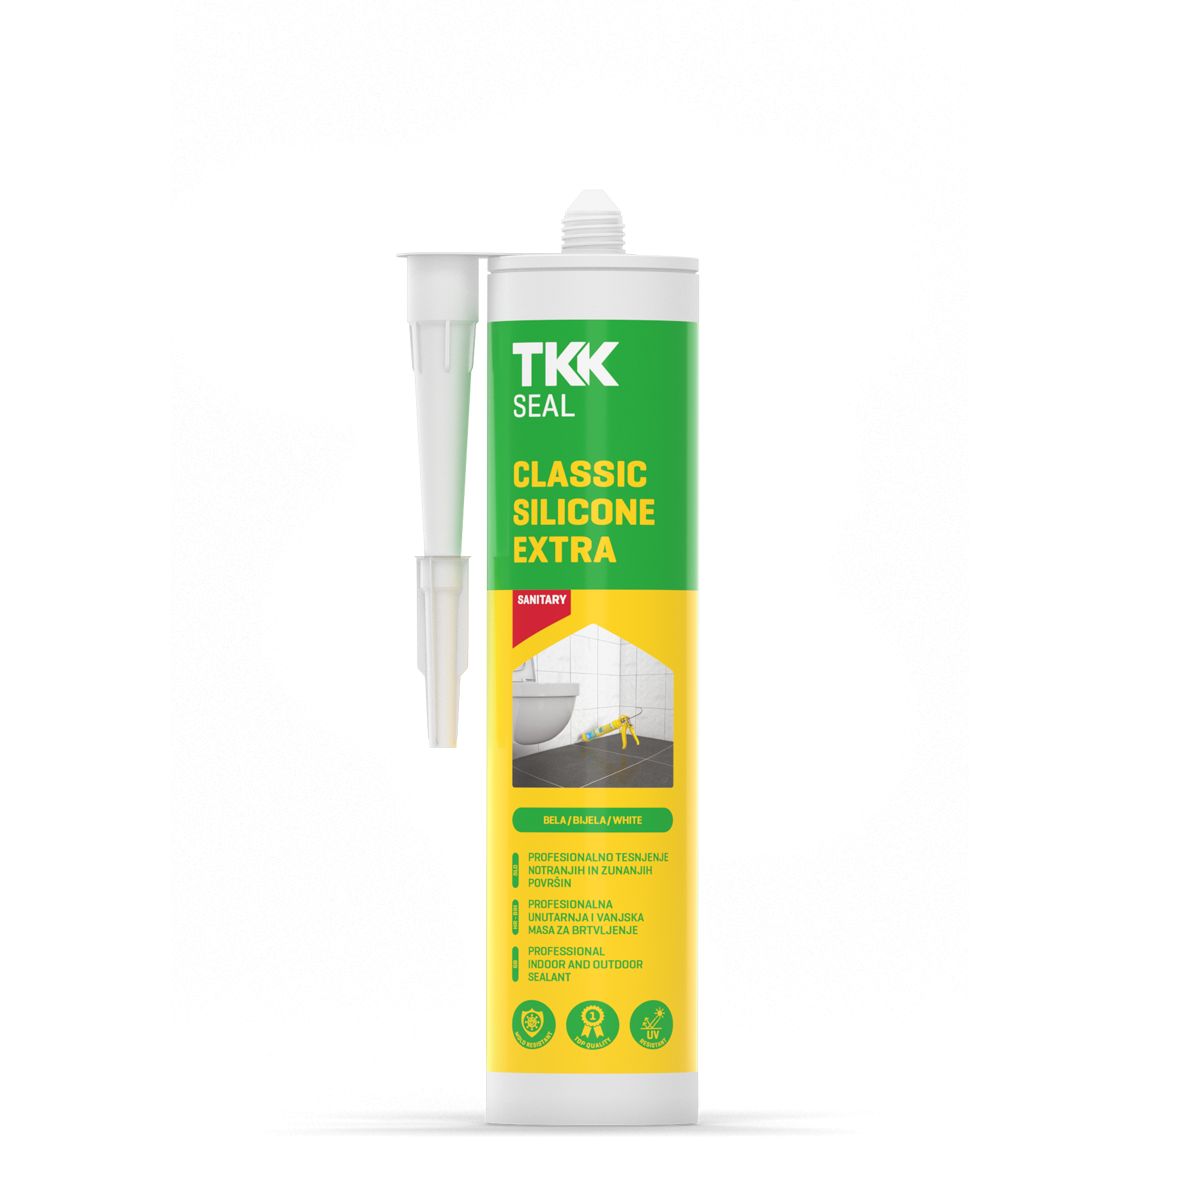 TKK Seal Classic Silicone Extra